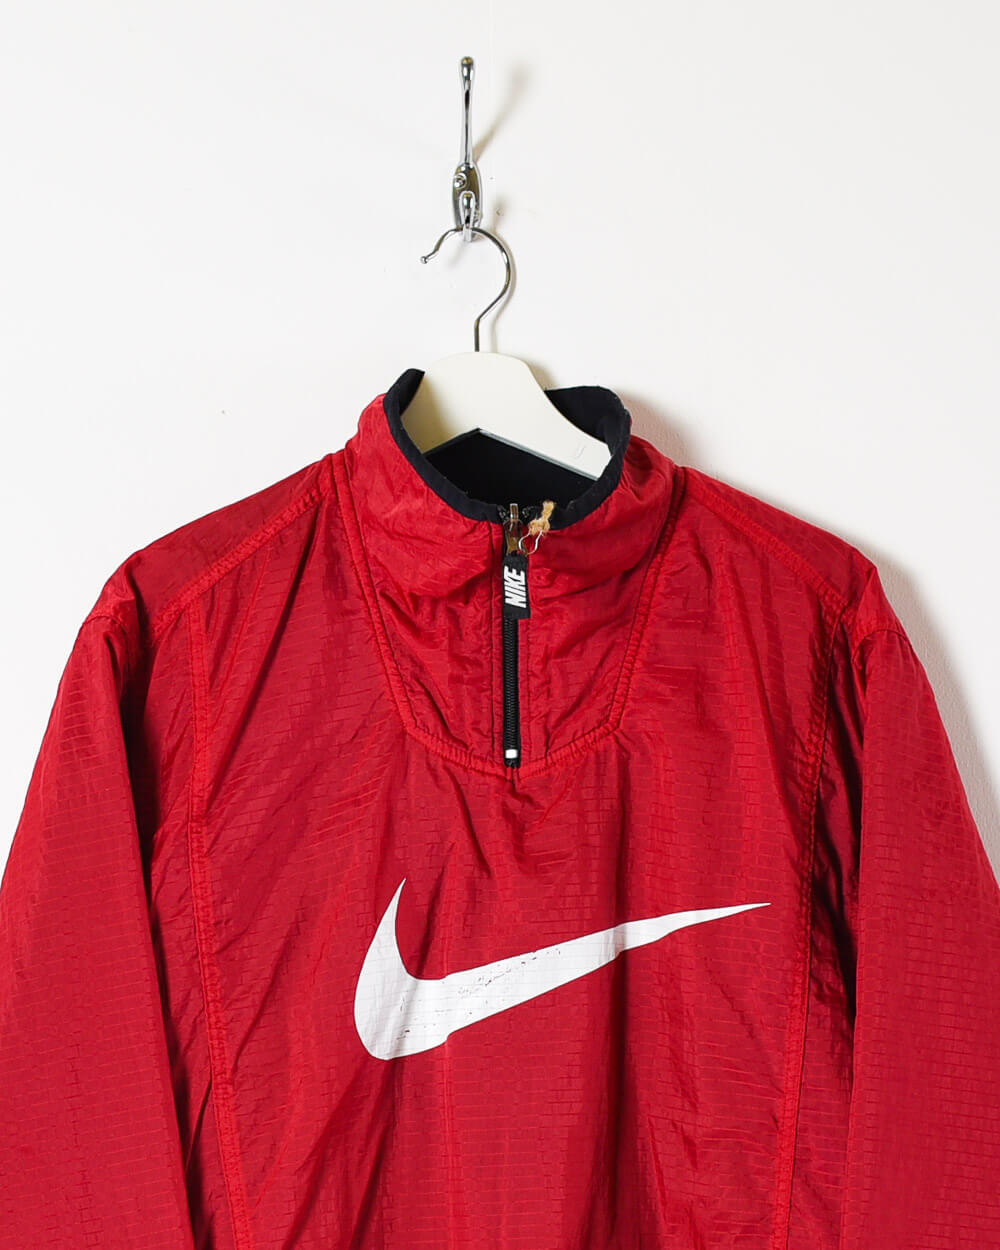 Red Nike 1/4 Zip Reversable Fleece Jacket - Small